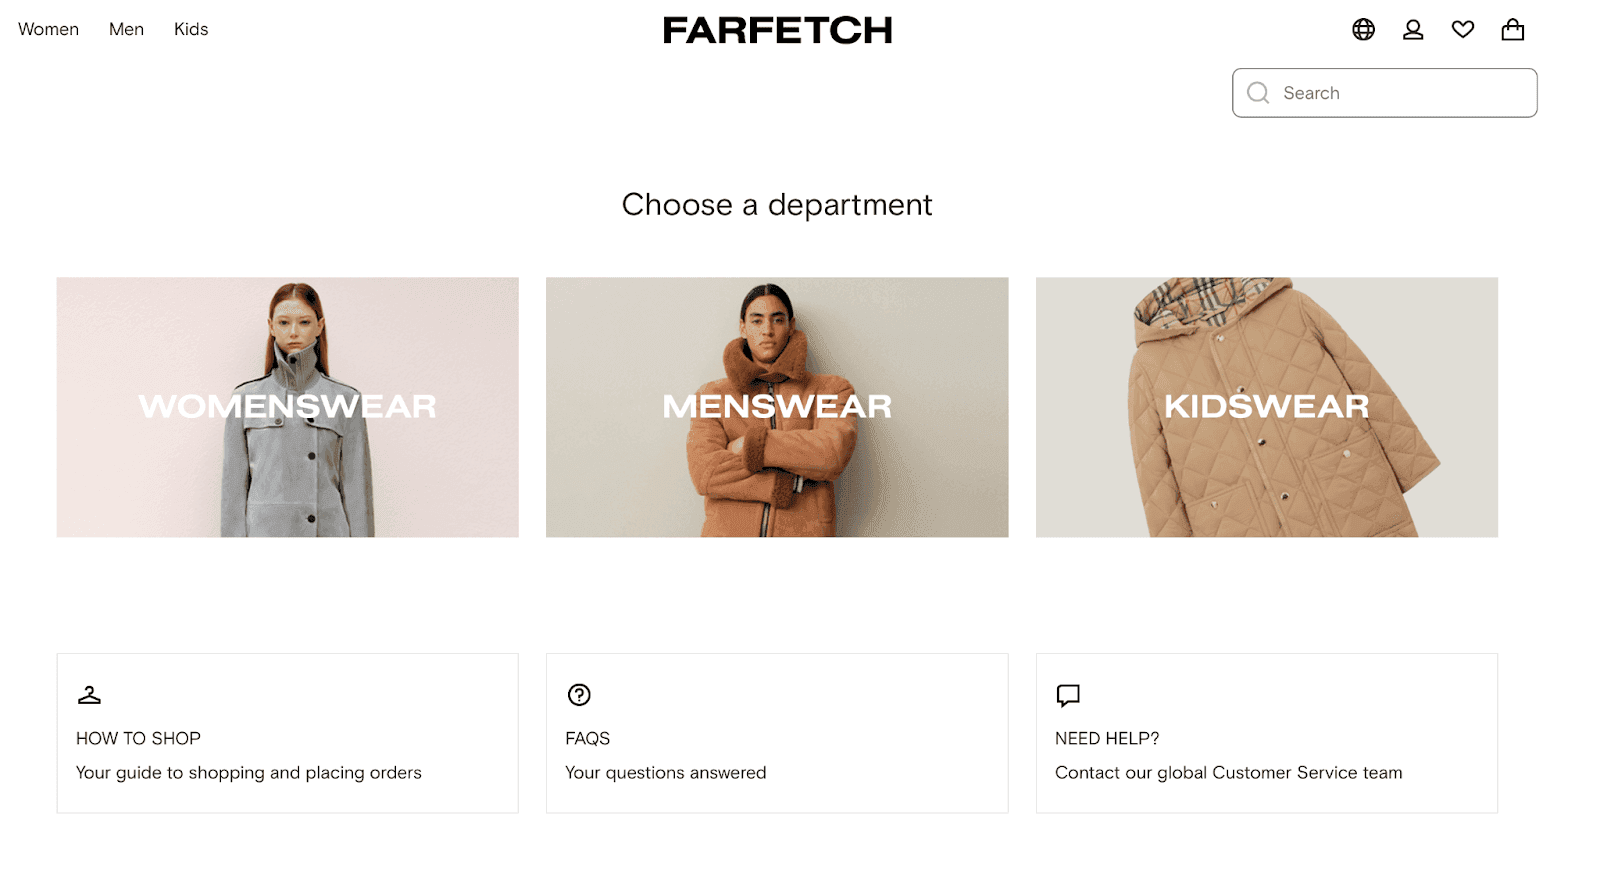 Farfetch website department selection